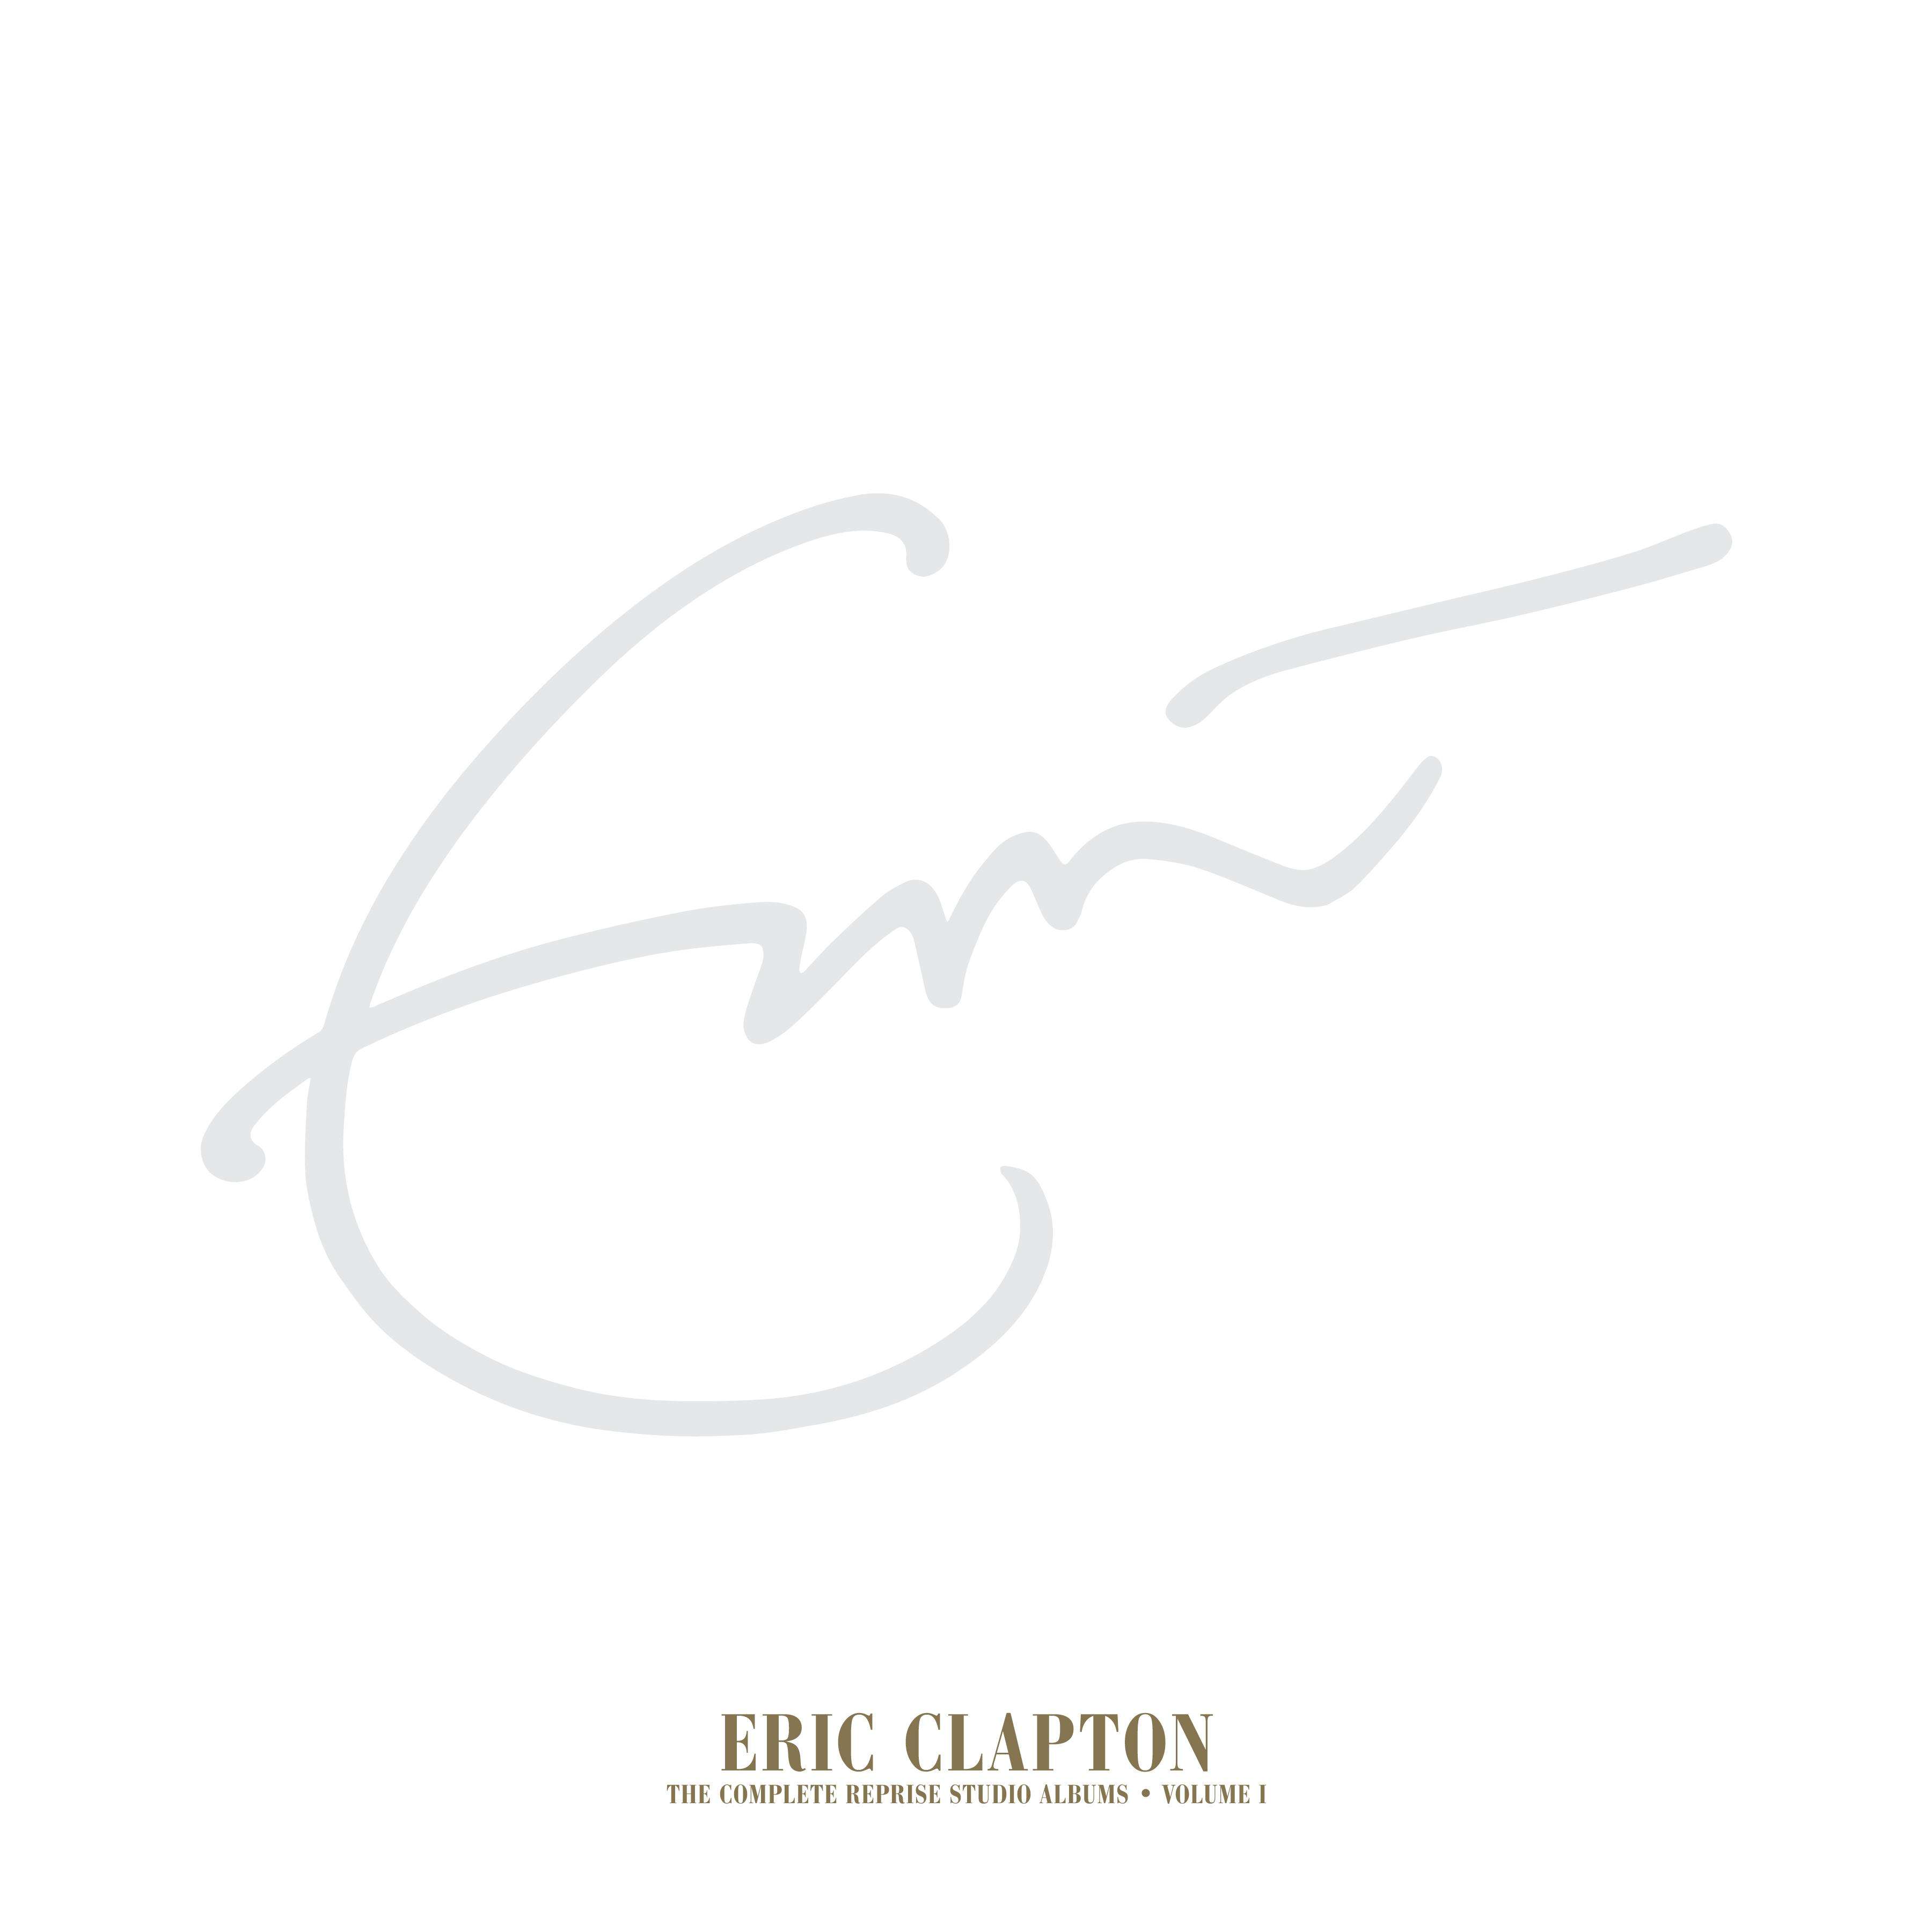 Eric Clapton - The Complete Reprise Studio Albums ● Volume I [Box Set Limited Edition] (093624895183)